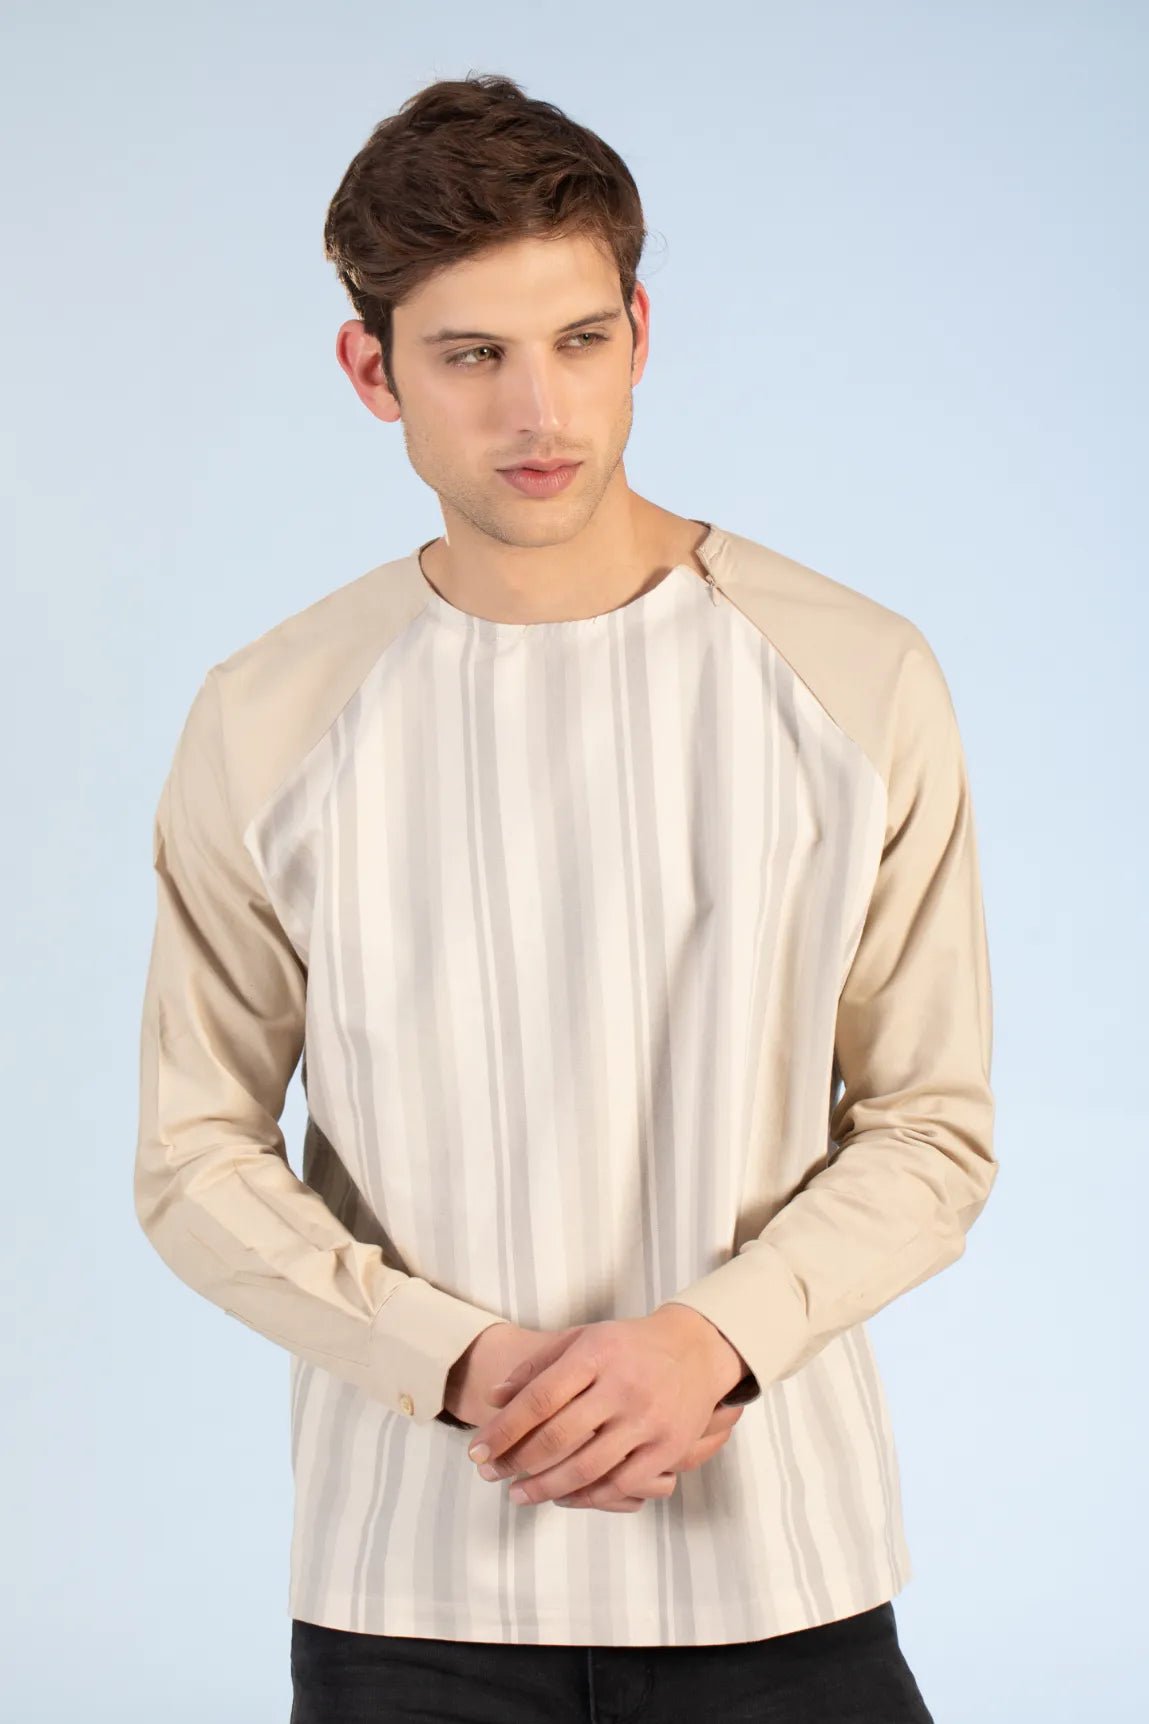 Buy Raglan Striped Shirt Online.